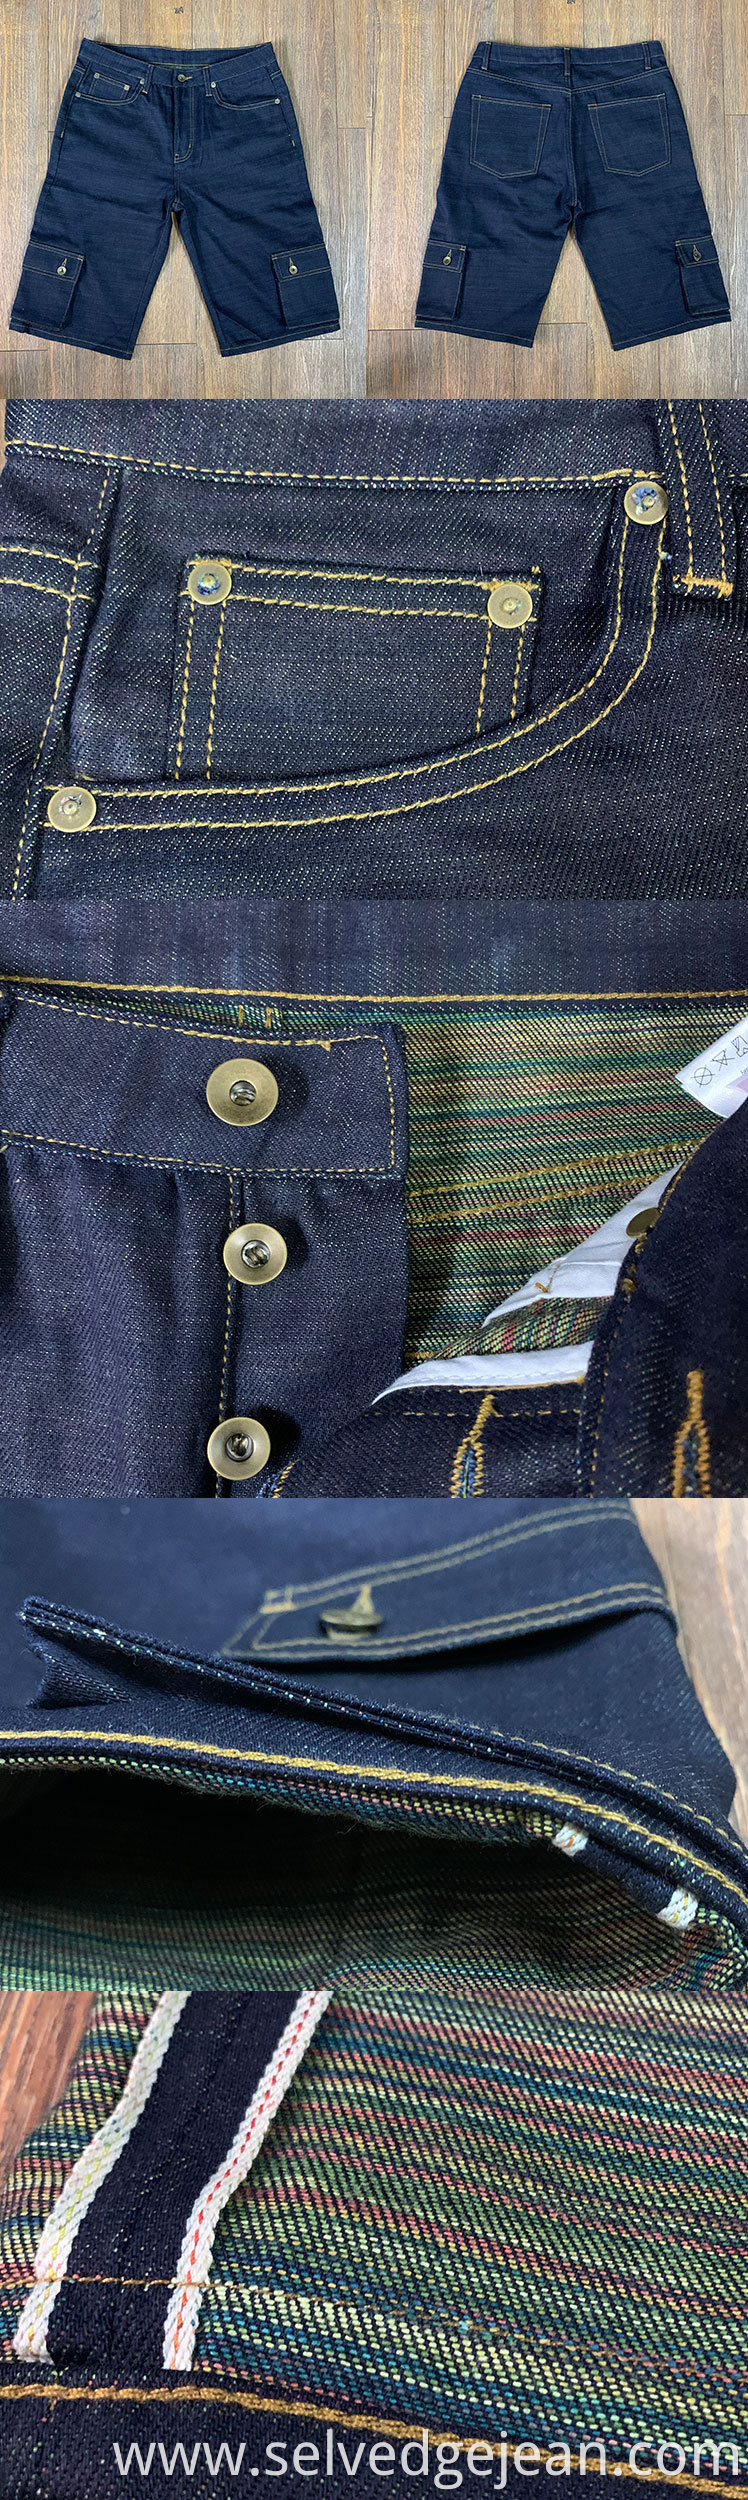 custom japanese jeans selvage indigo candy weft 12oz multifunction cargo pants vintage raw selvedge denim shorts for men women